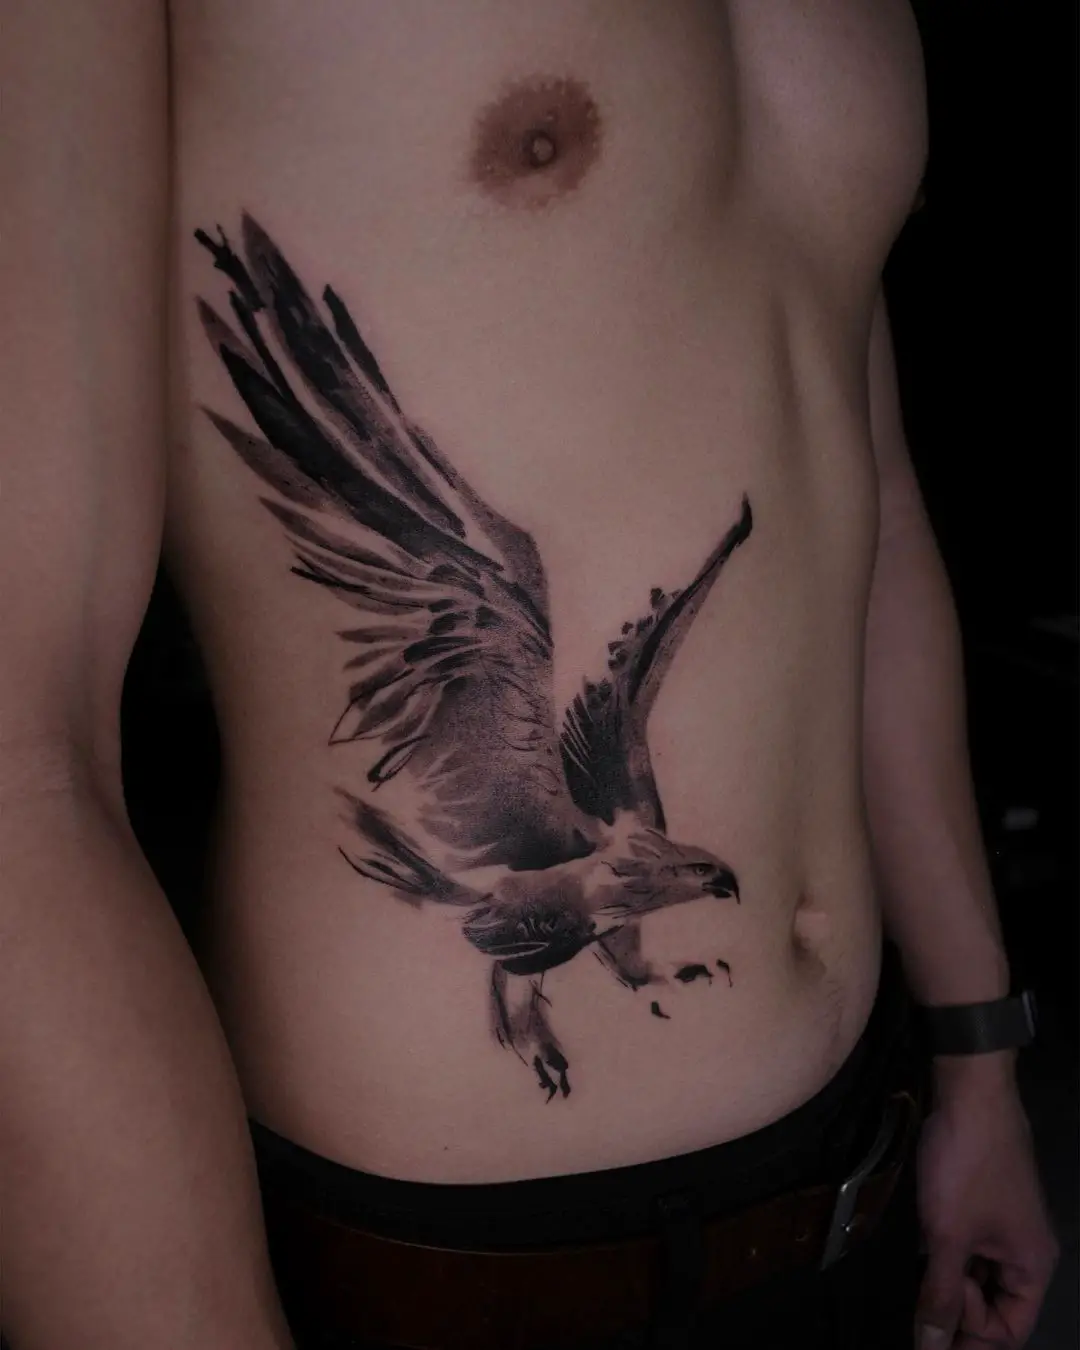 Bald eagle tattoo by vocozun